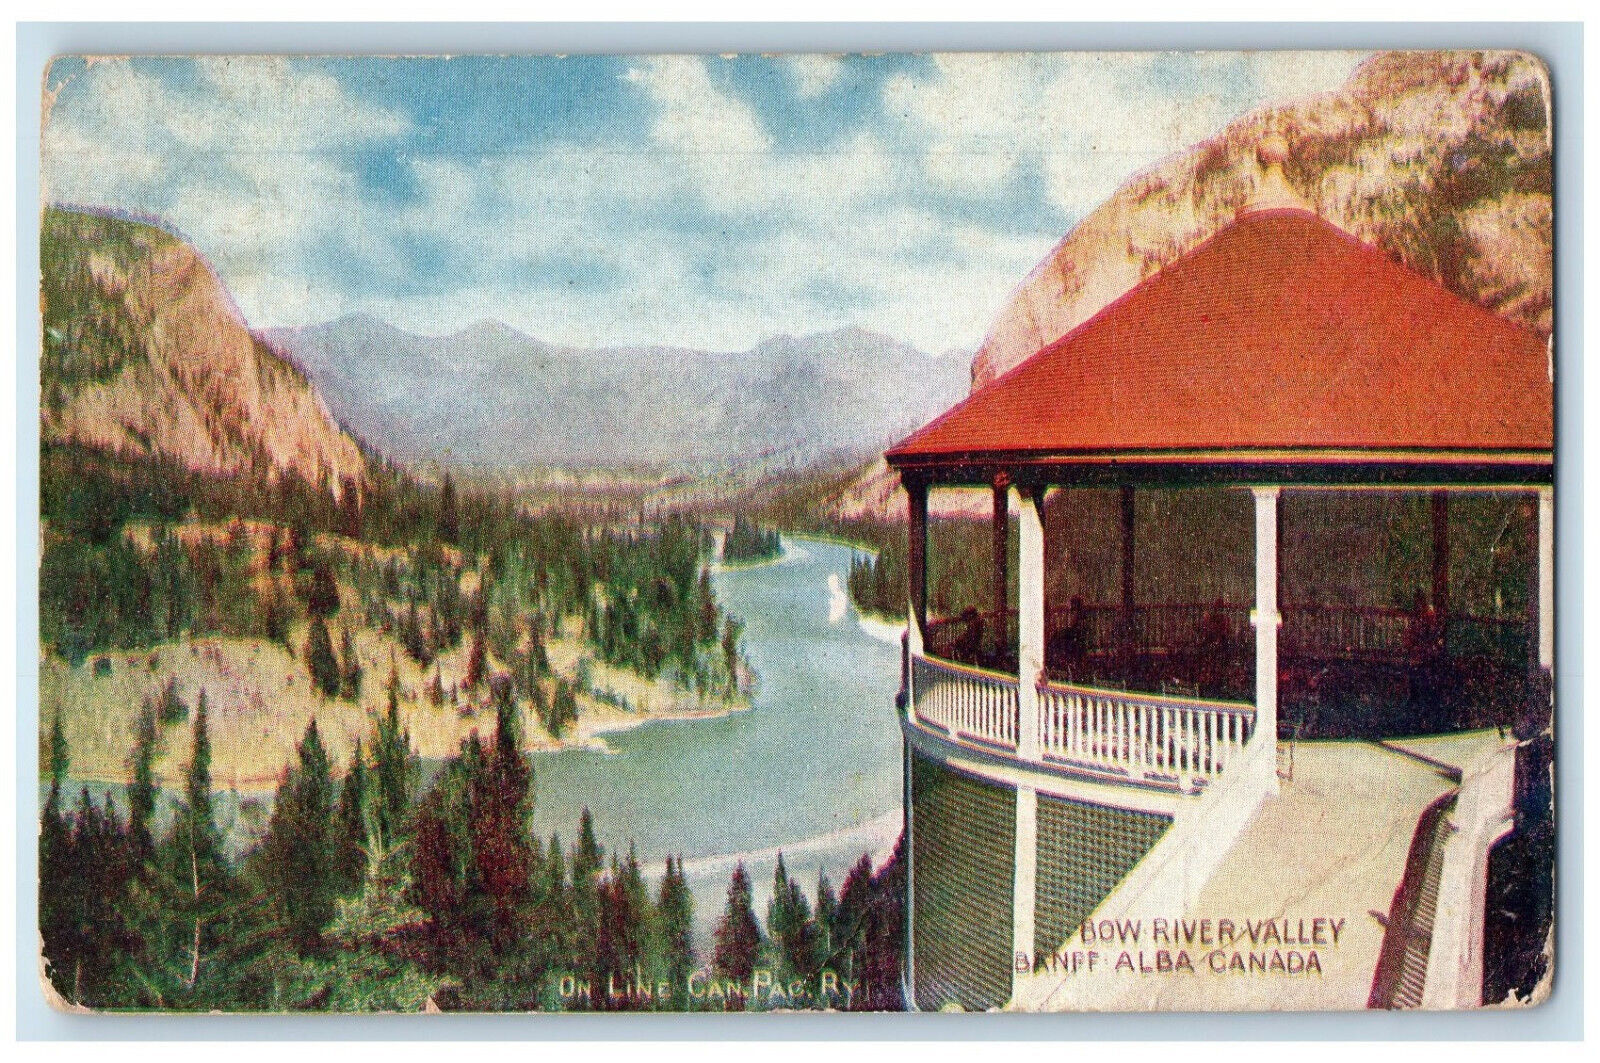 Banff Alberta Canada Postcard Bow River Valley On Line Canadian P. Railway 1903